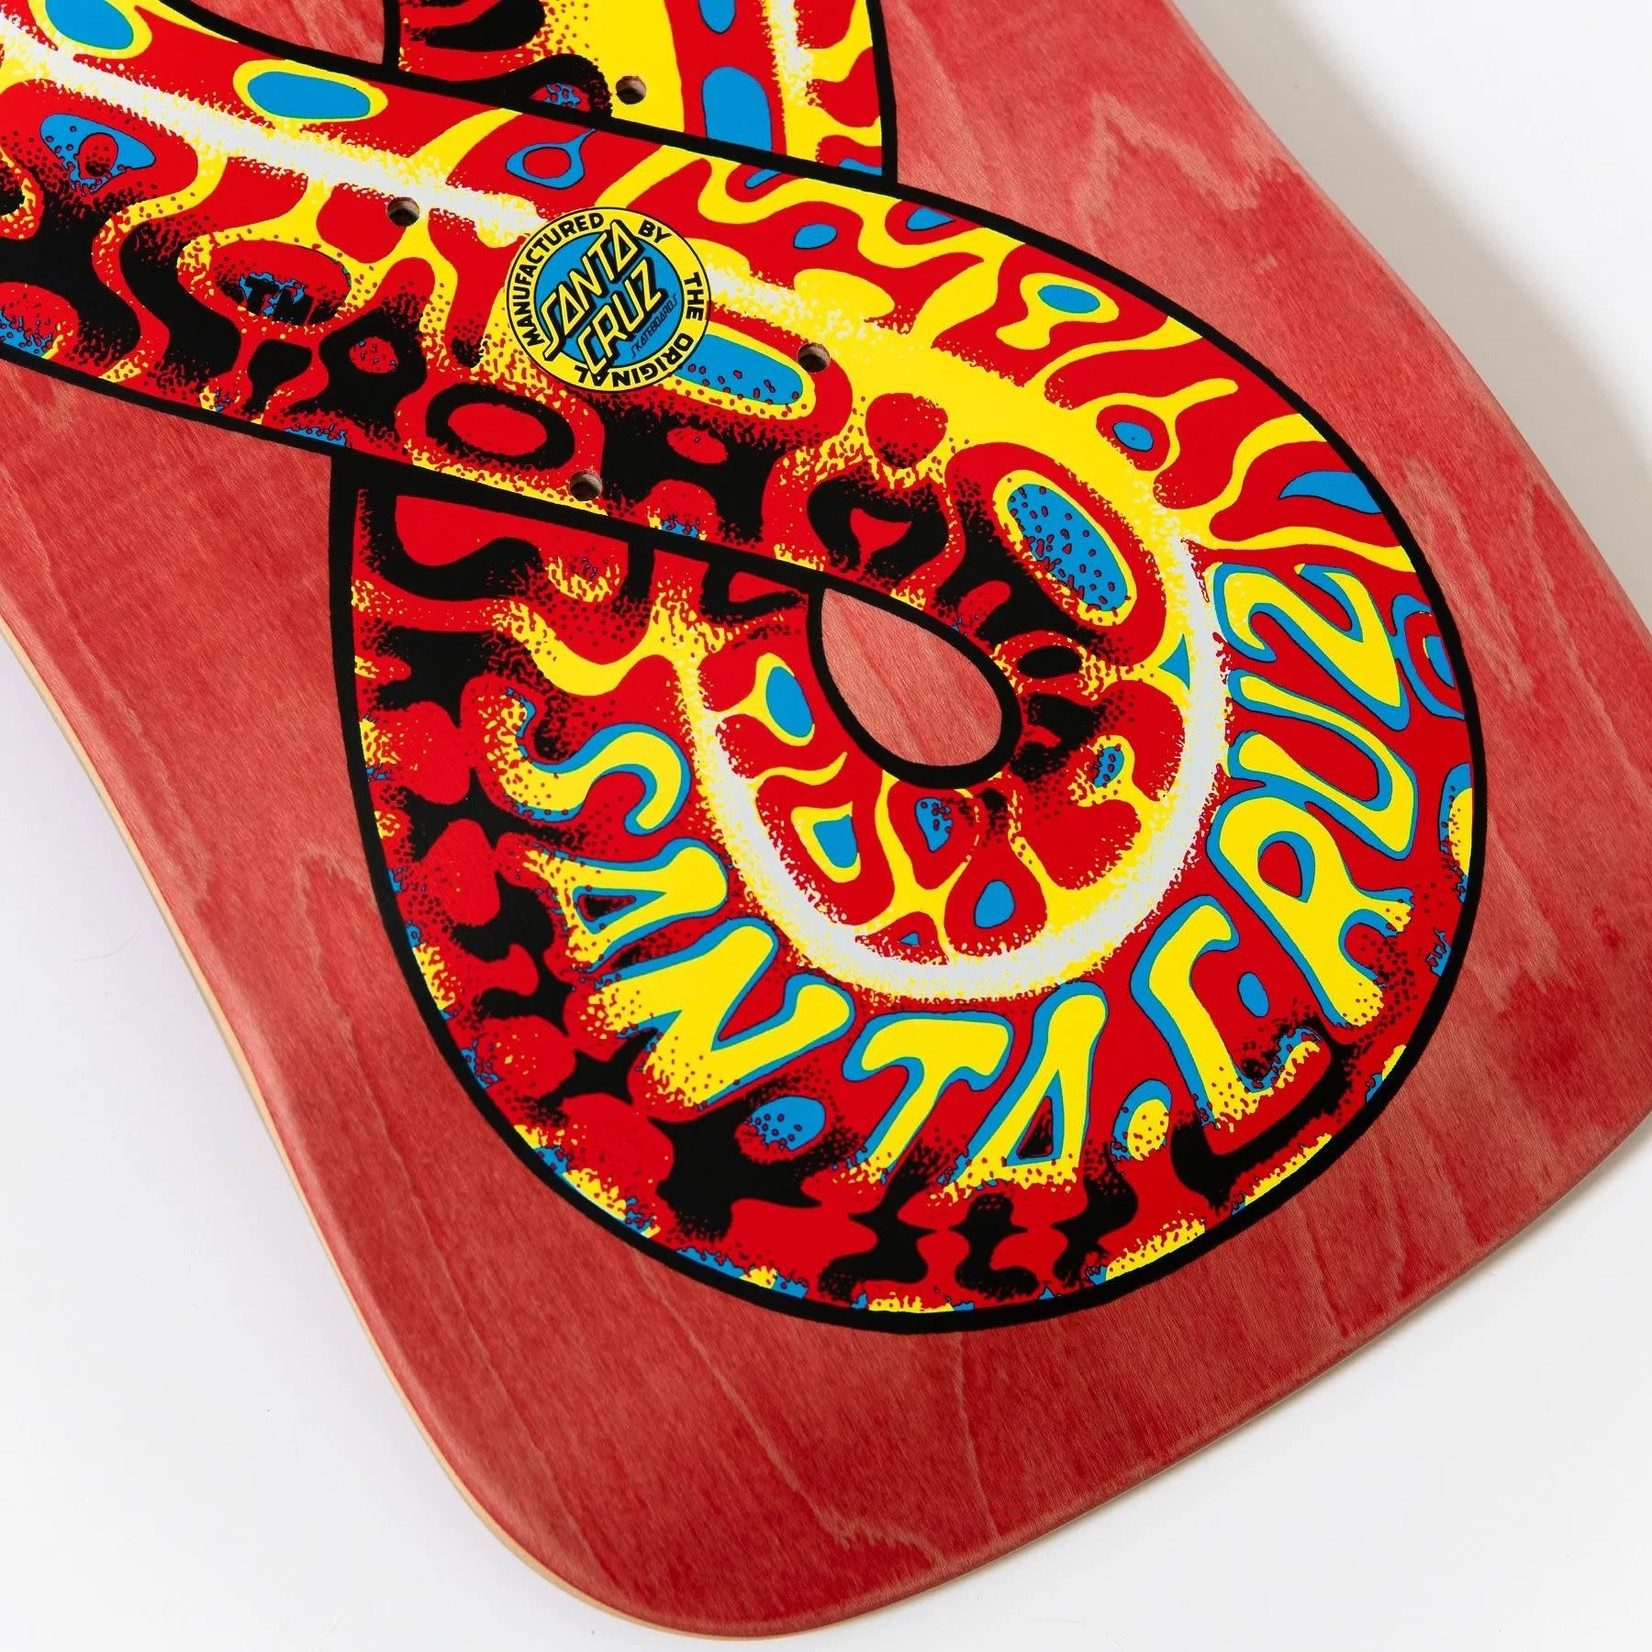 Santa Cruz Skateboards Santa Cruz Kendall Snake Reissue Deck - 9.975" x 30.125"